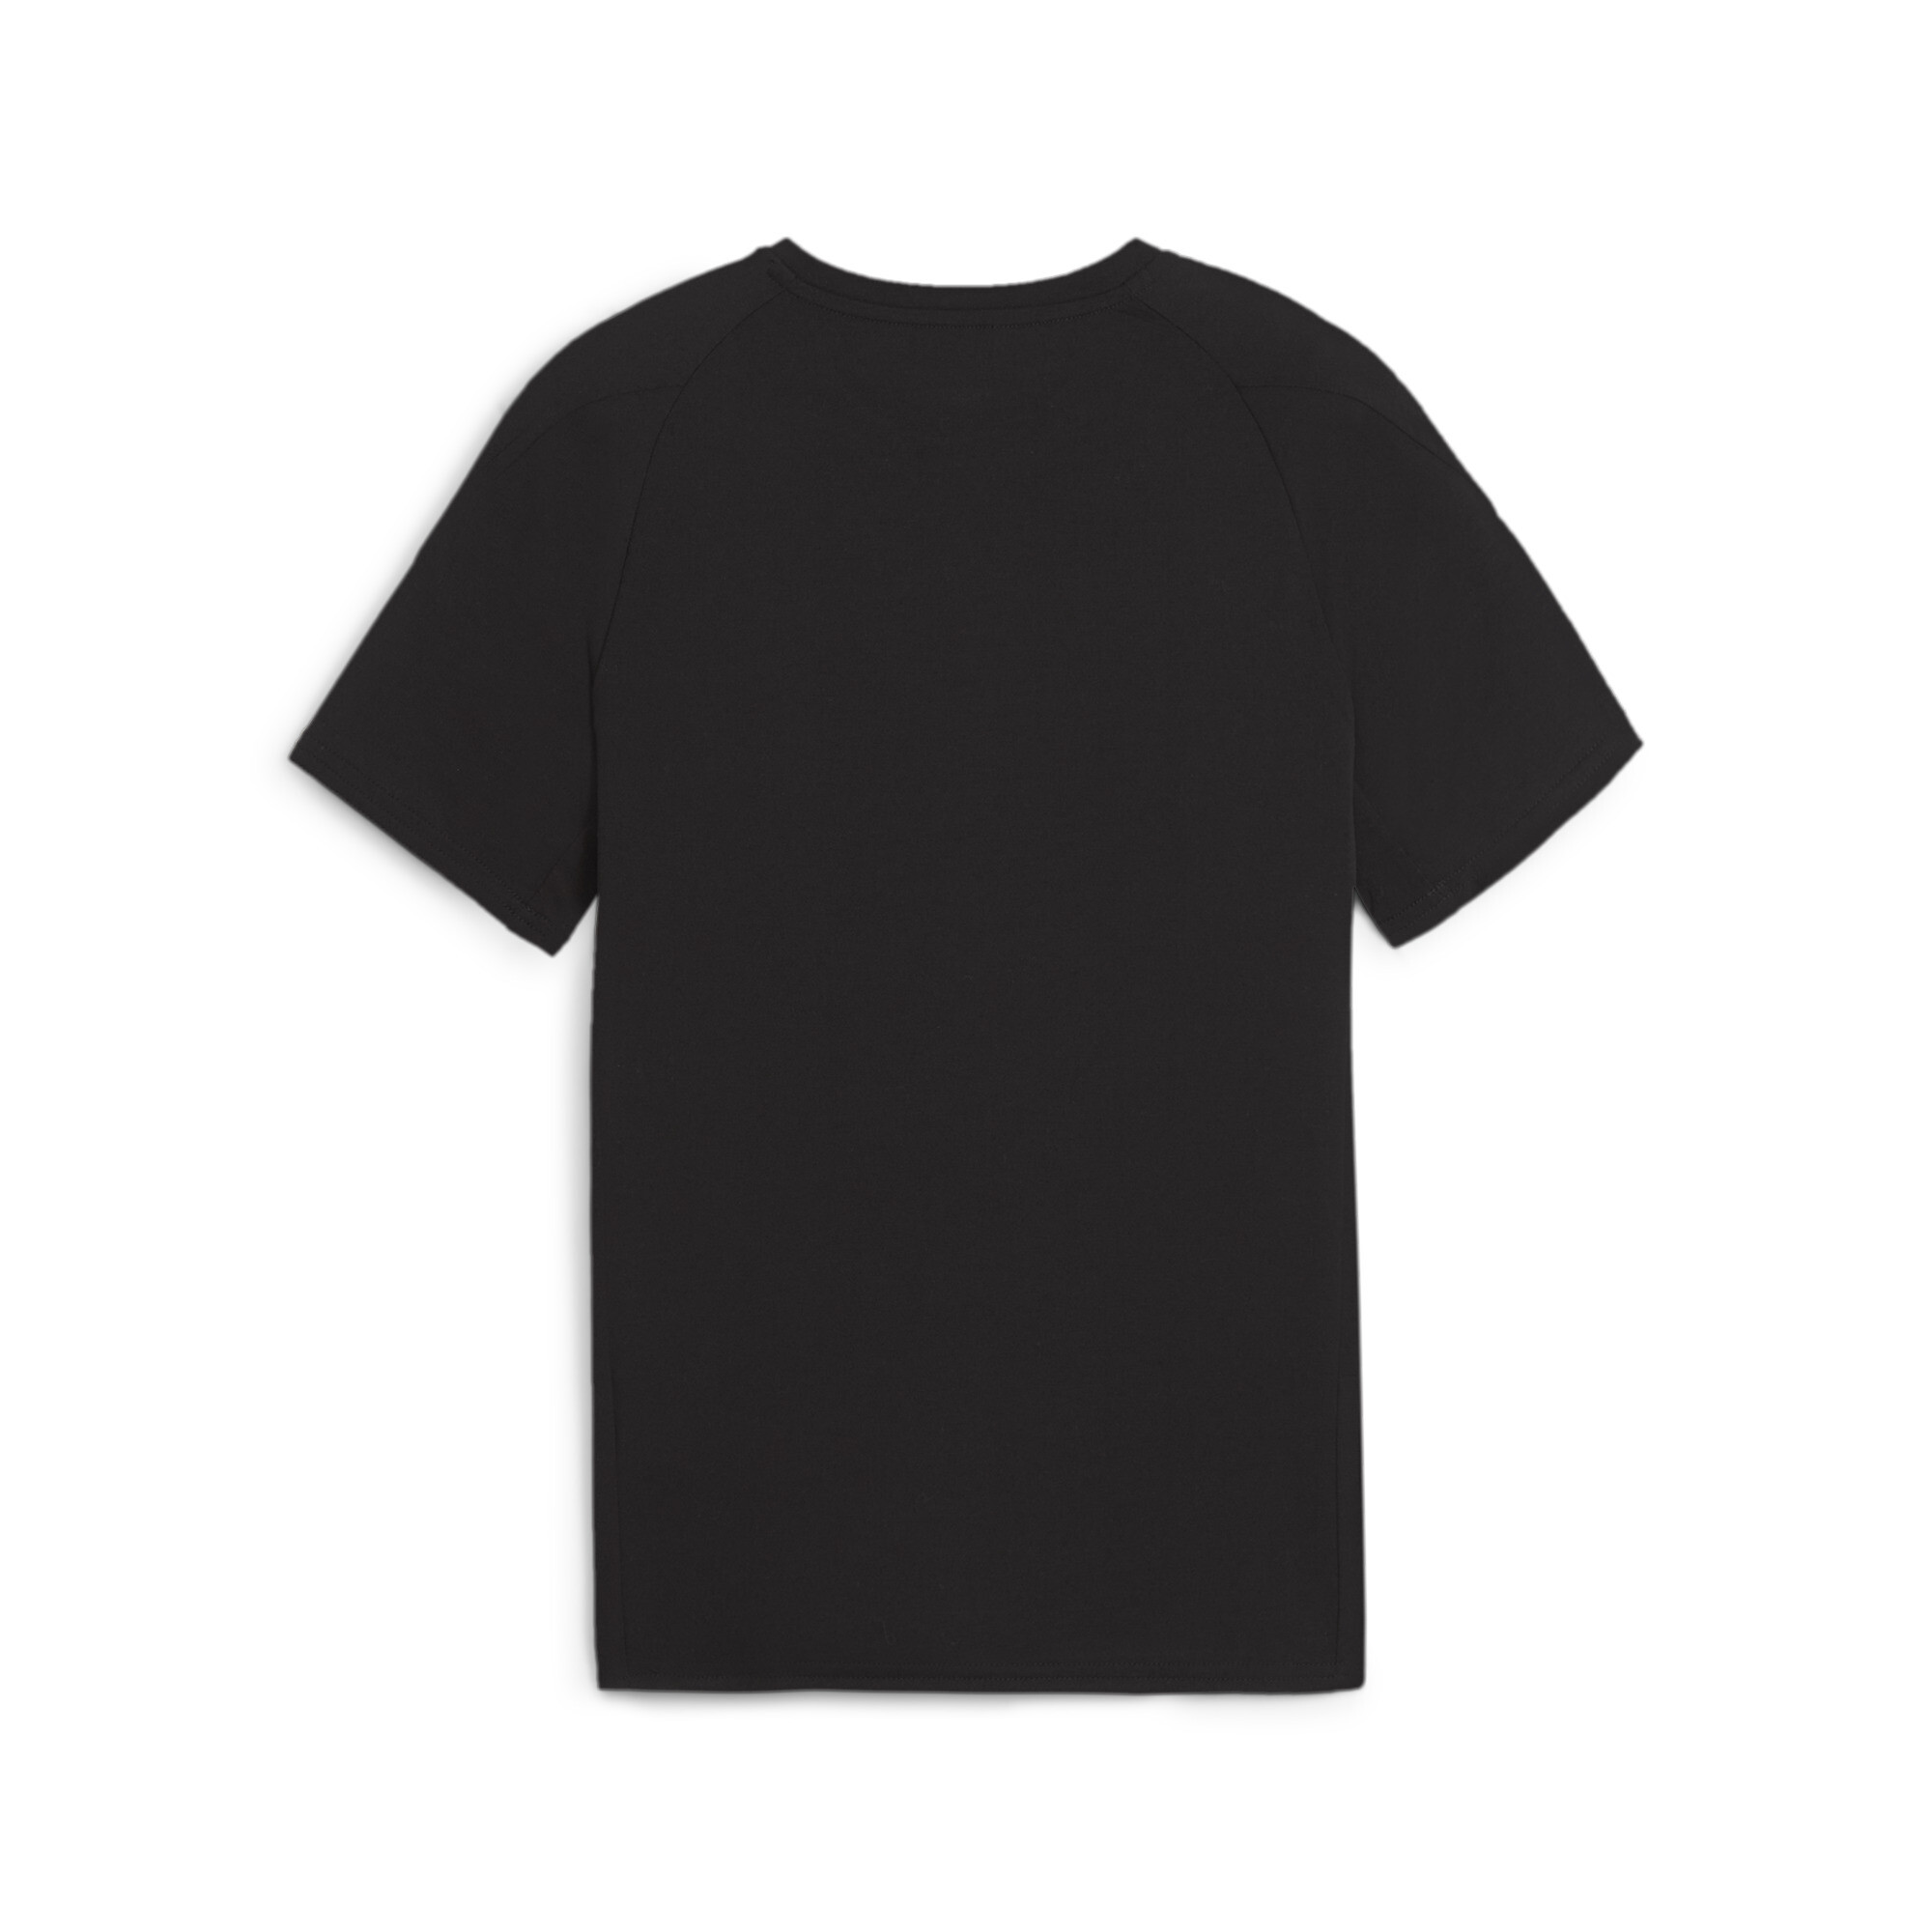 PUMA EVOSTRIPE T-Shirt In Black, Size 7-8 Youth